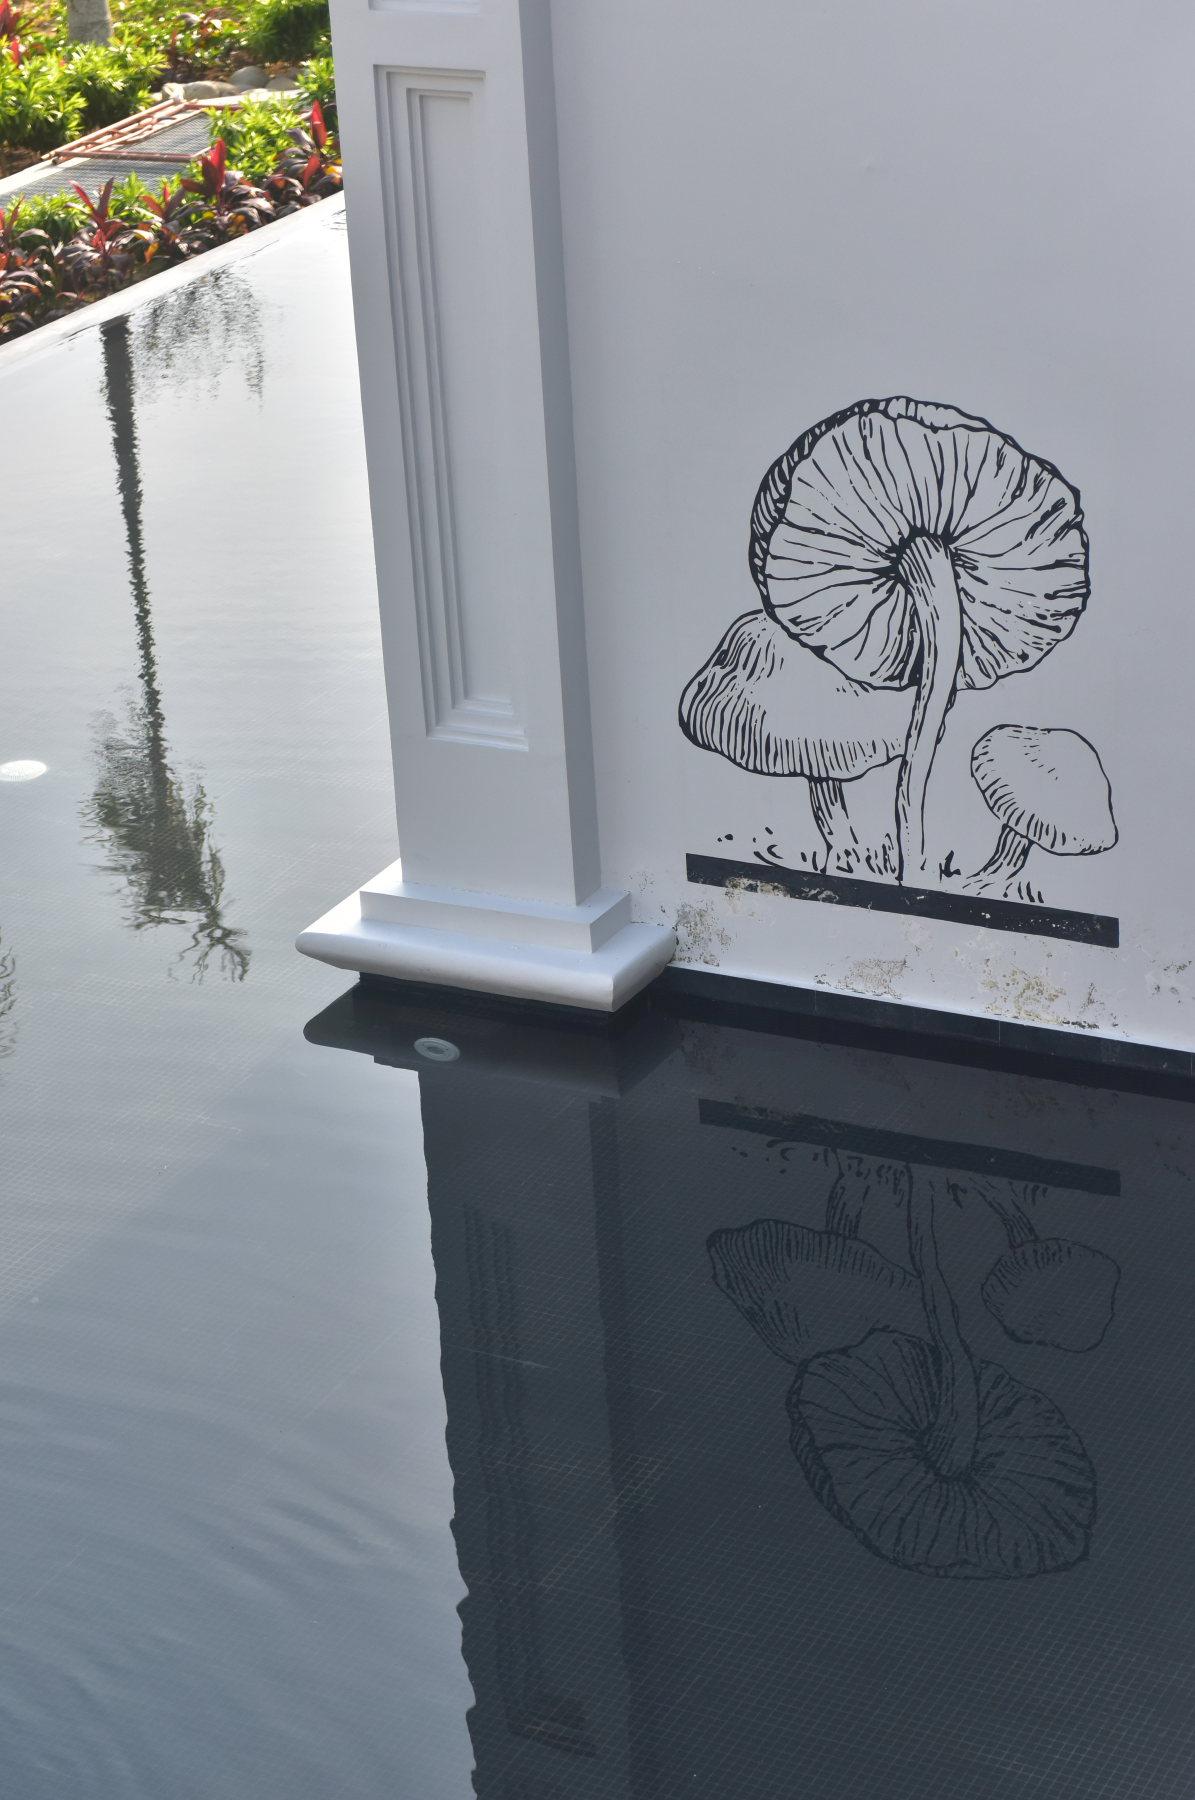 Hand-drawn illustrations are hidden throughout the resort / JW Marriott/Bensley